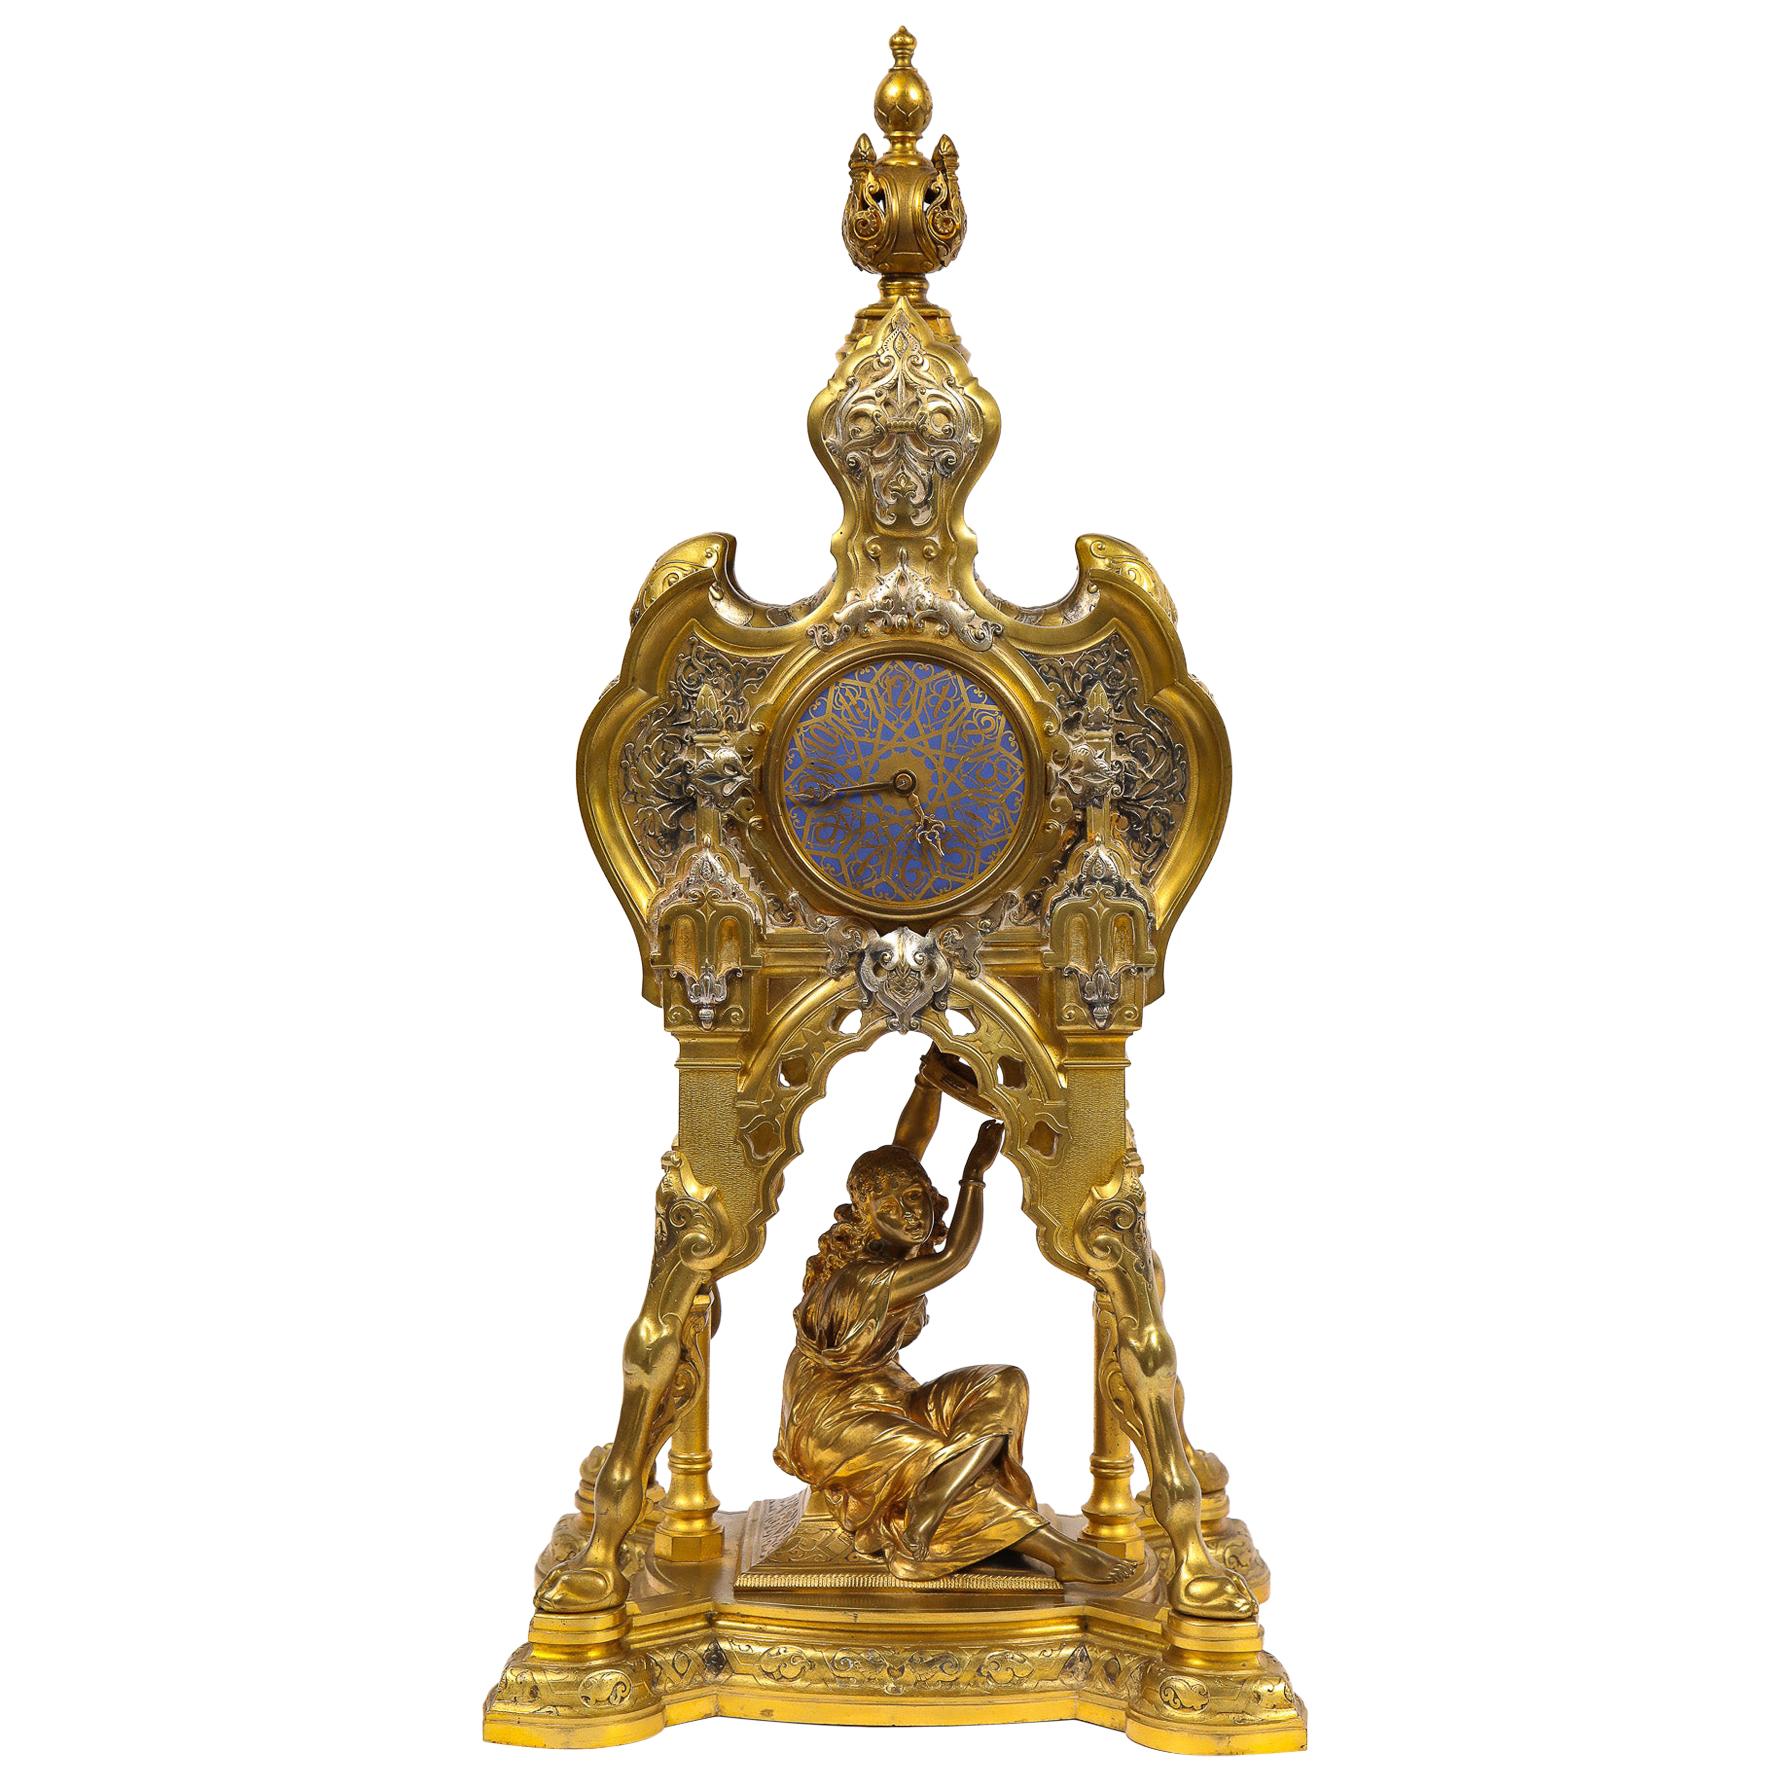 Antique French Orientalist/Moorish Silver/Gilt Bronze and Enamel Figural Clock